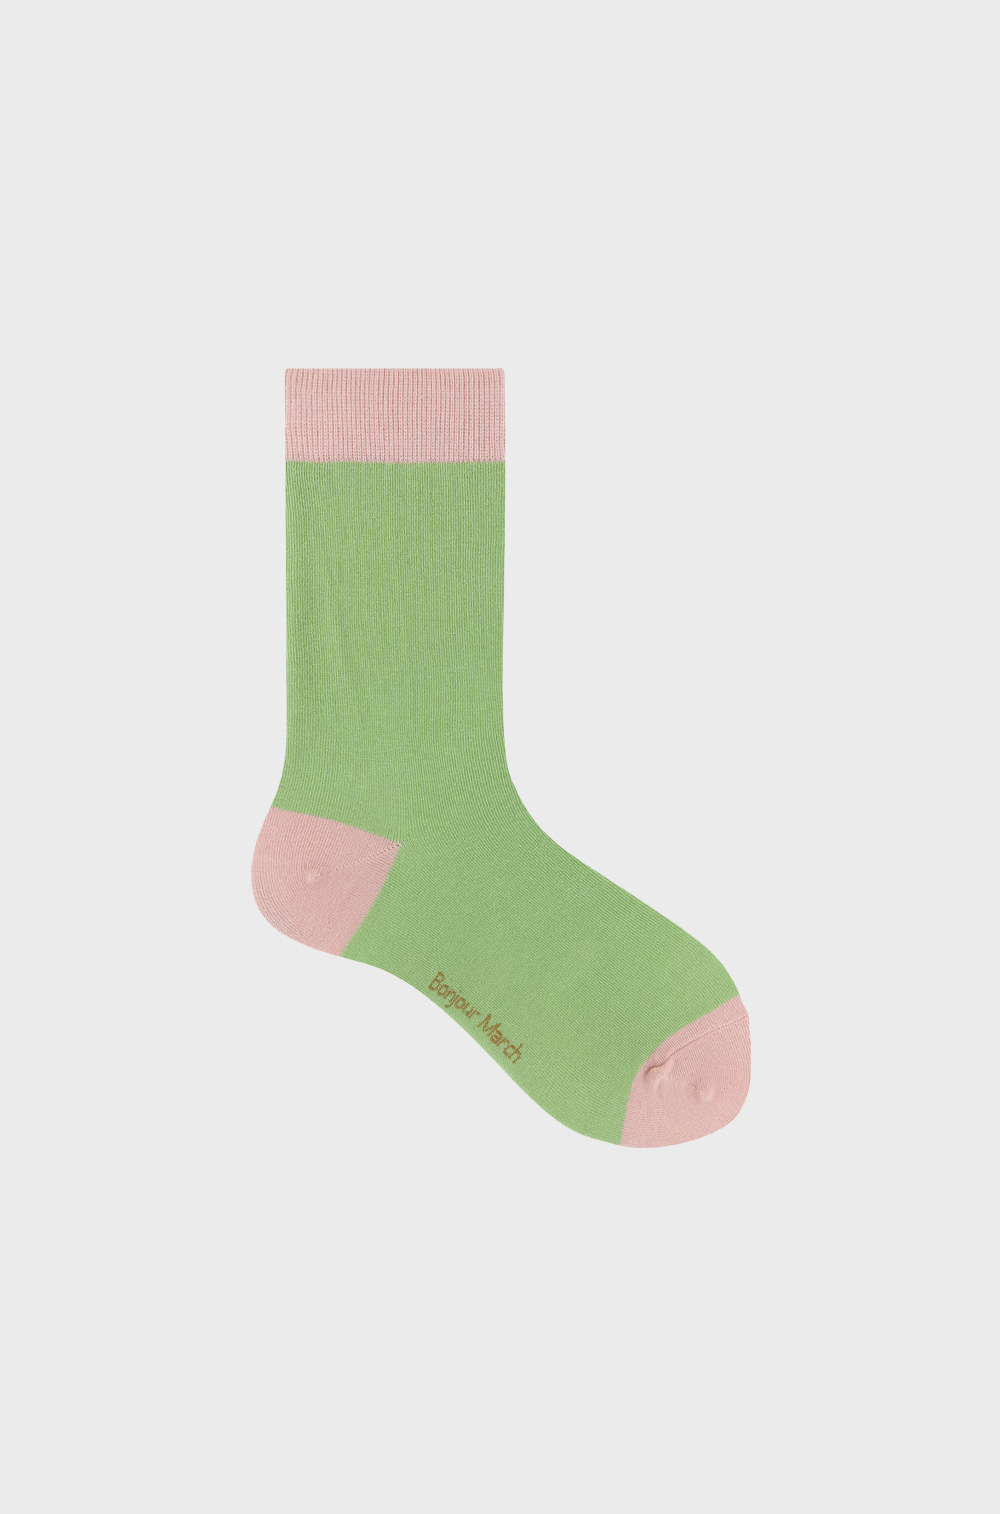 Pair socks_green pink